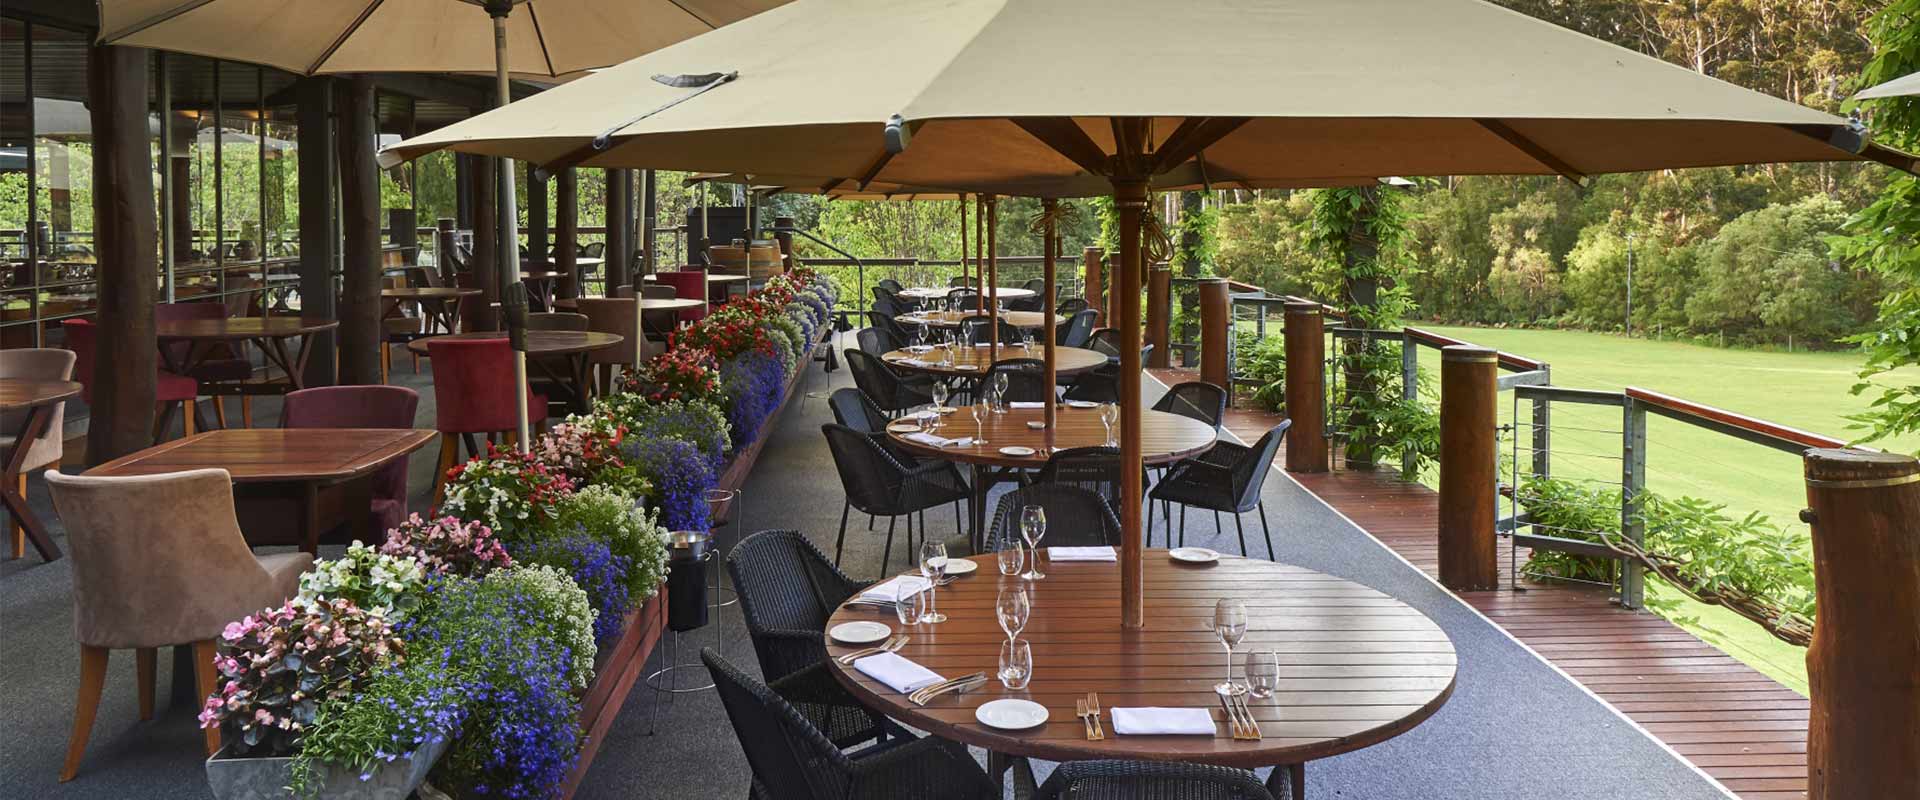 verandah and tables at leeuwin estate flowers umbrellas western australia